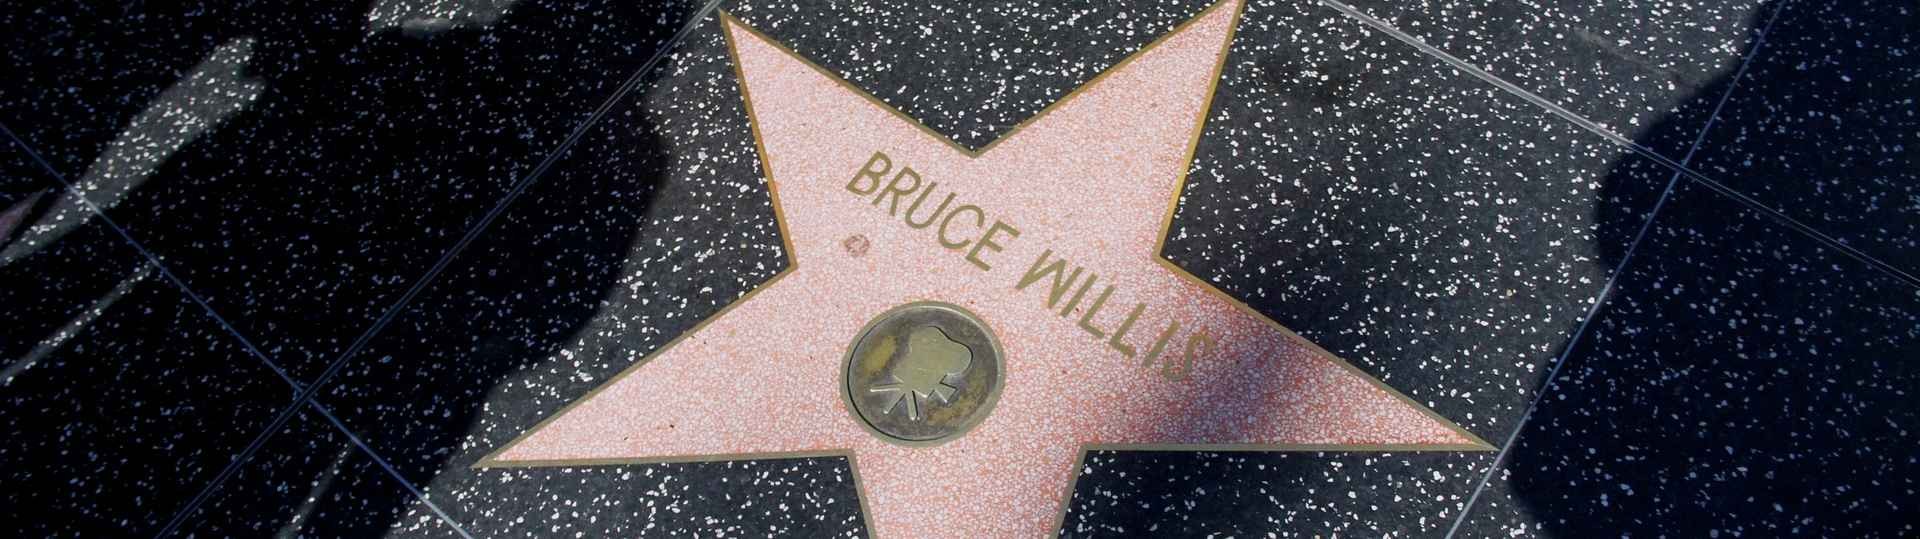 Bruce Willis se queda sin habla